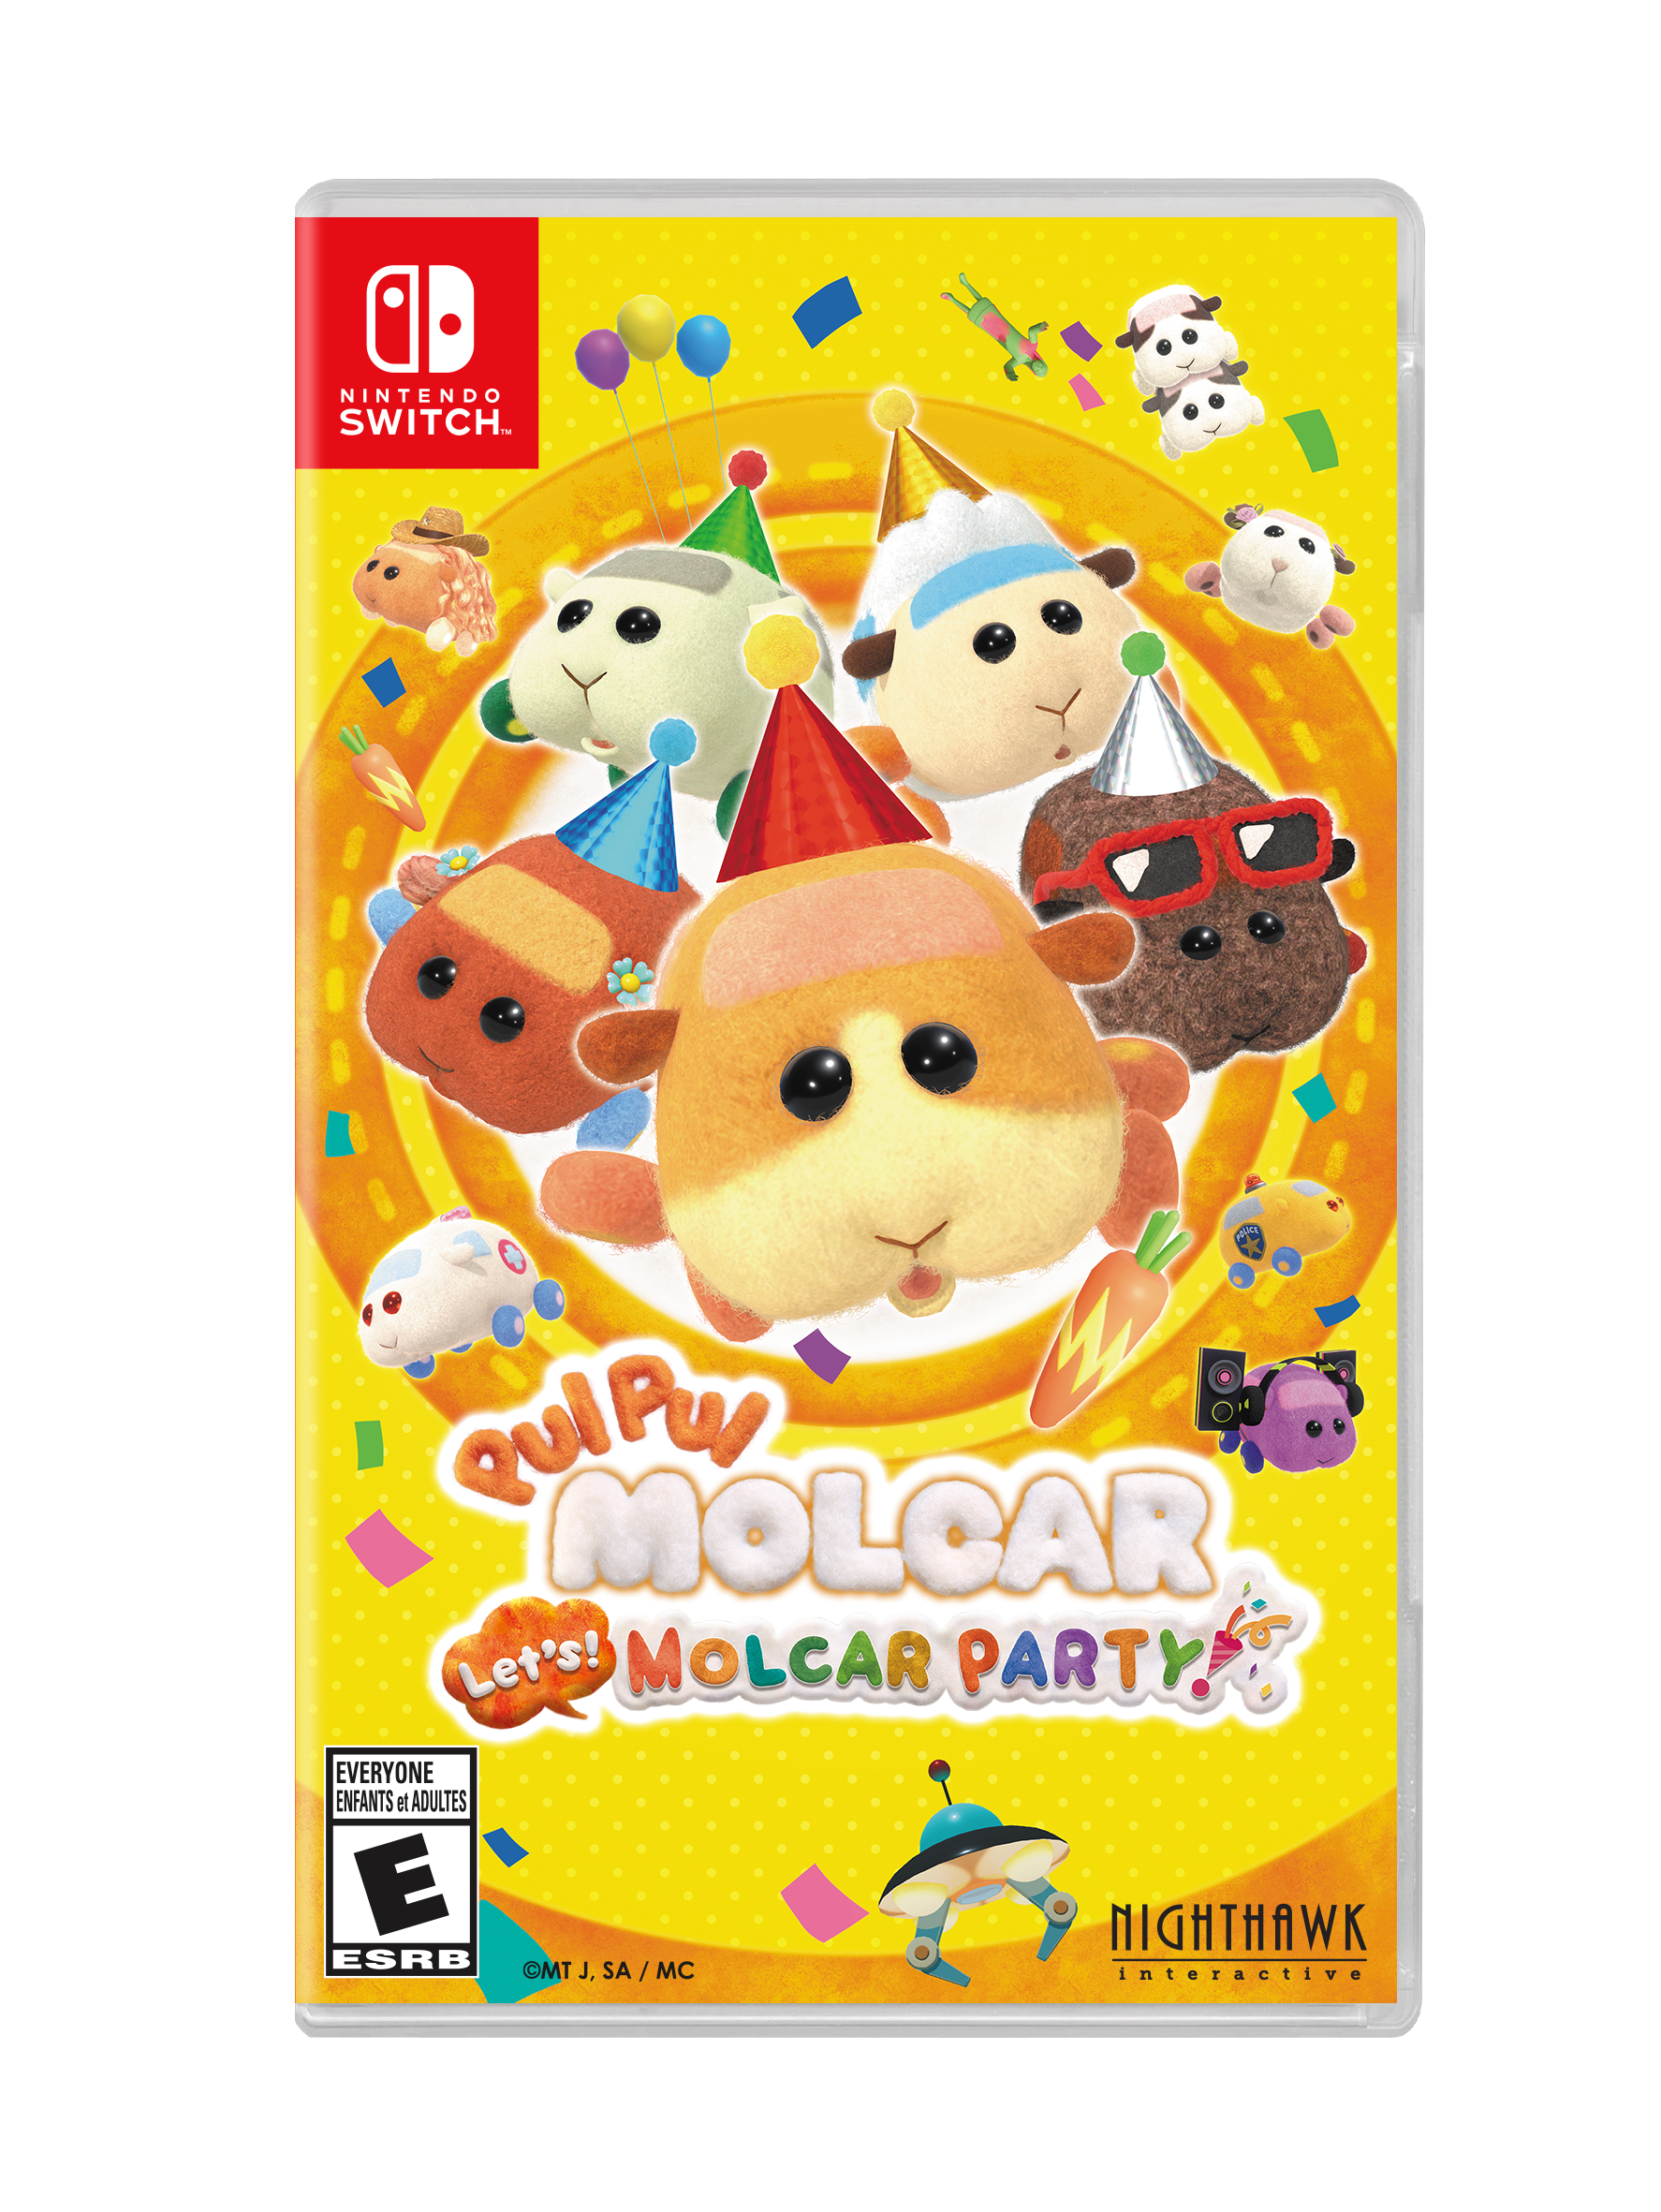 Pui Pui Molcar Let's Molcar Party! - Nintendo Switch